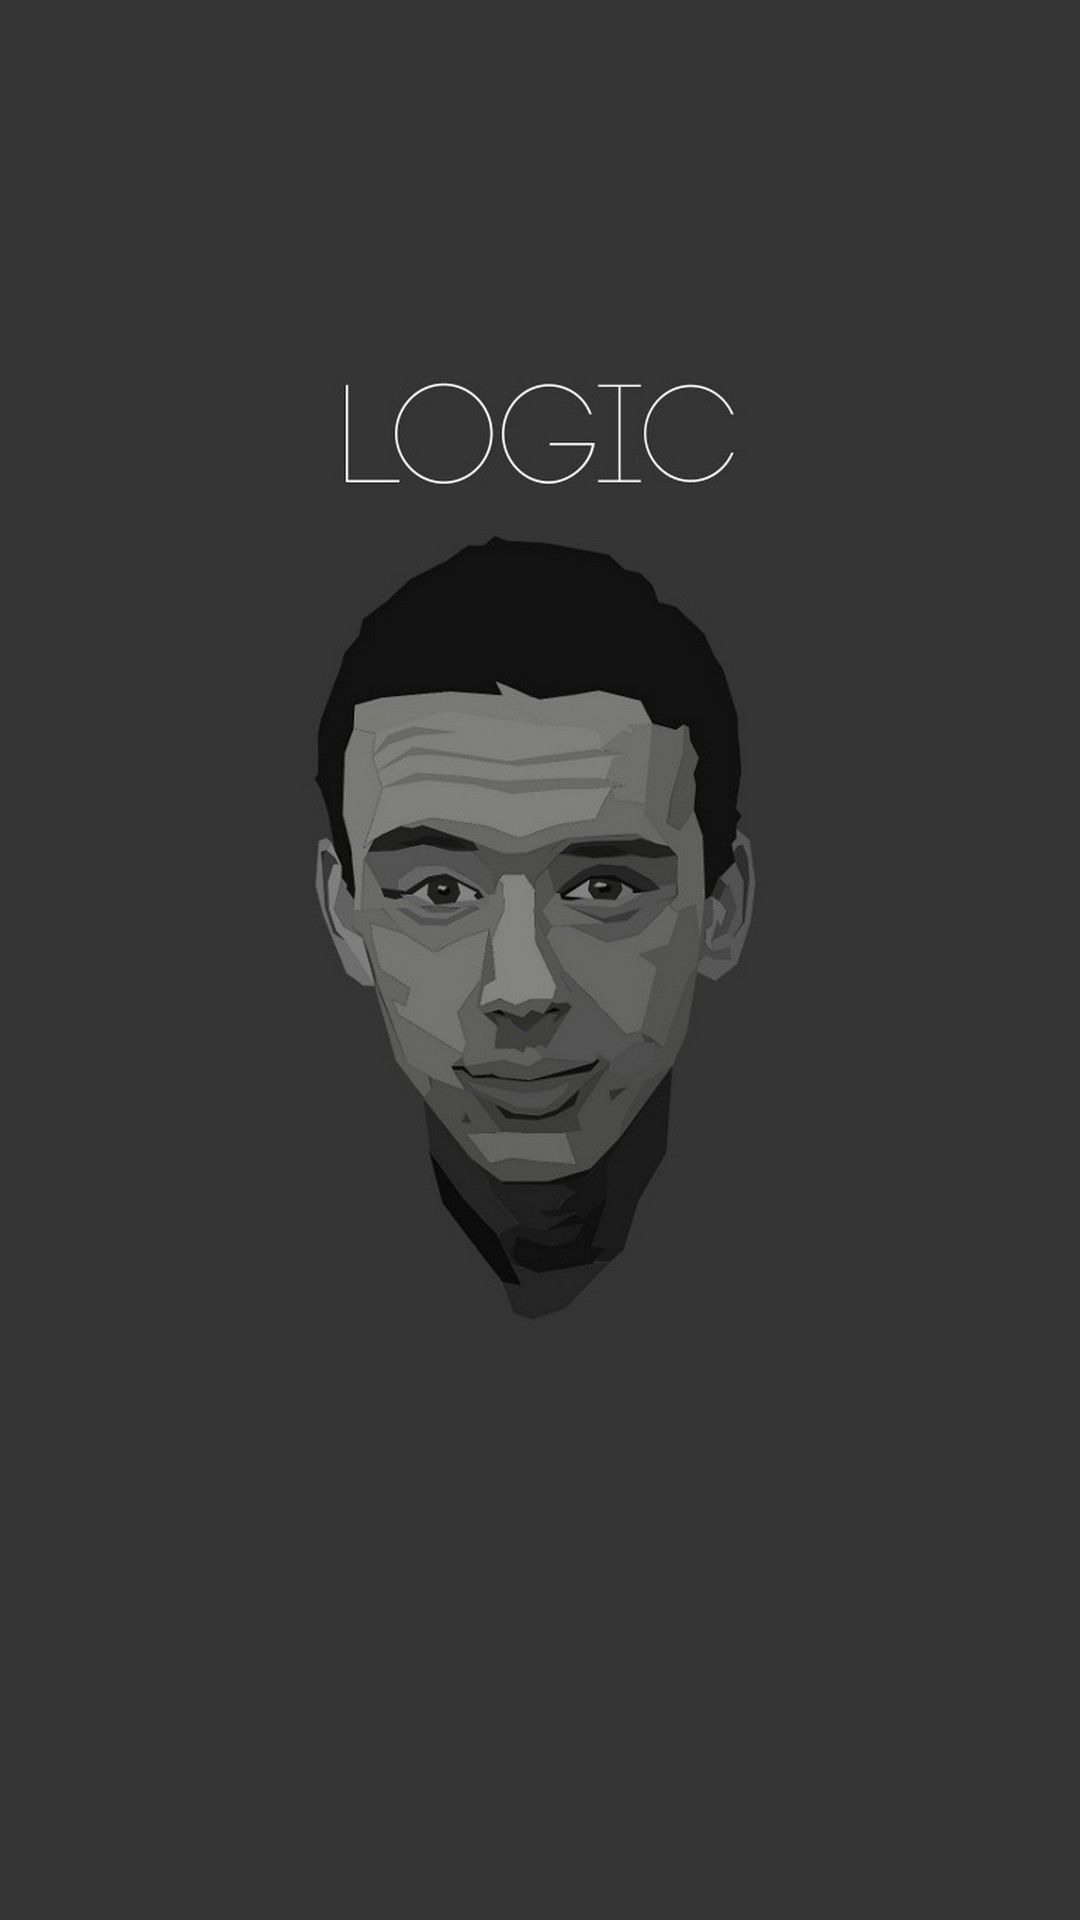 Beautiful Joyner Lucas Wallpaper. Logic rapper, Logic rapper wallpaper, Joyner lucas